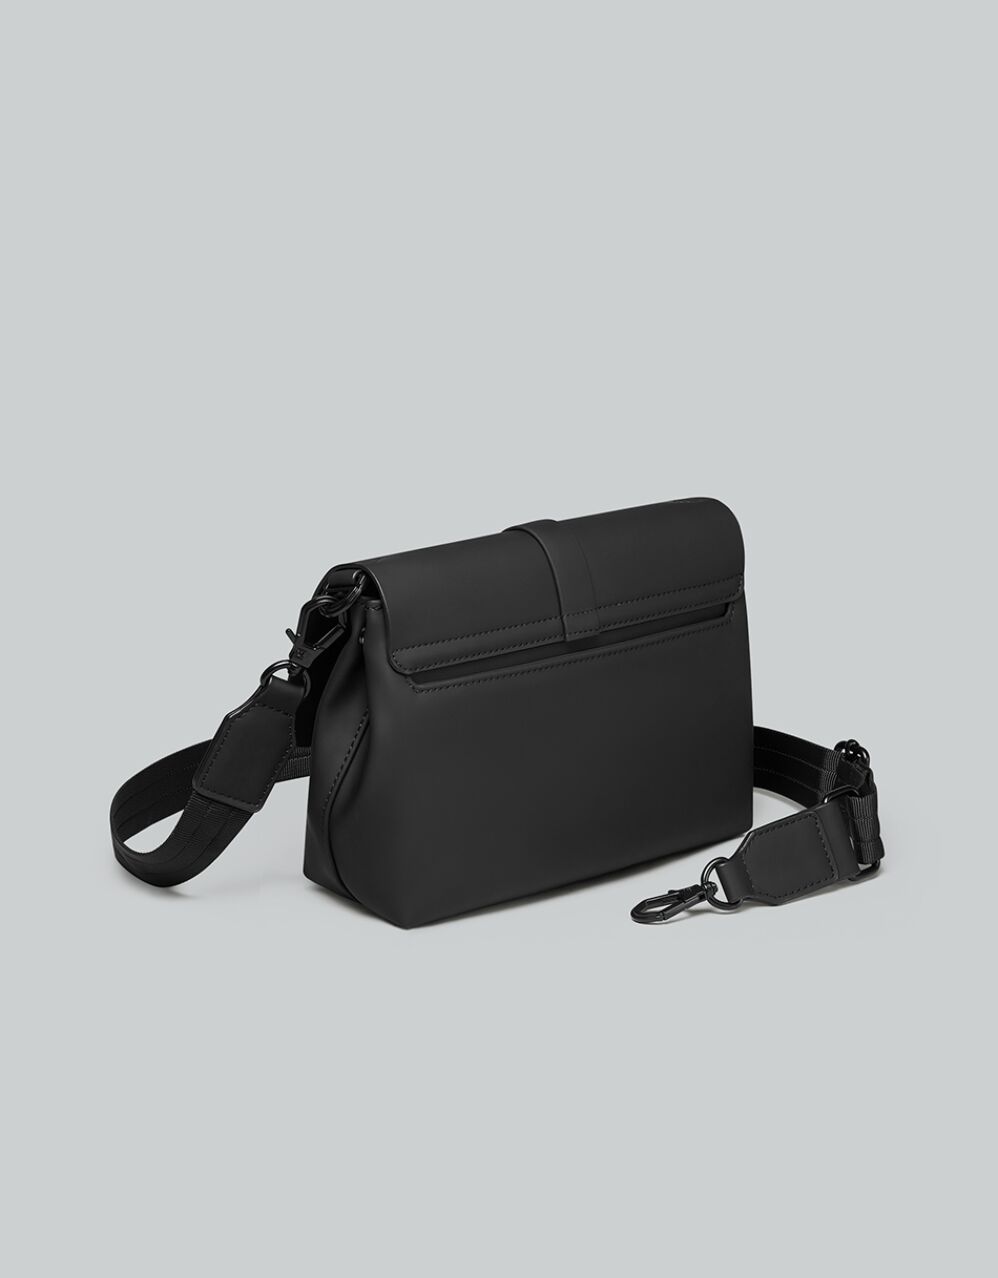 Spläsh Crossbody Bag - Waterproof, Sustainable, Chic